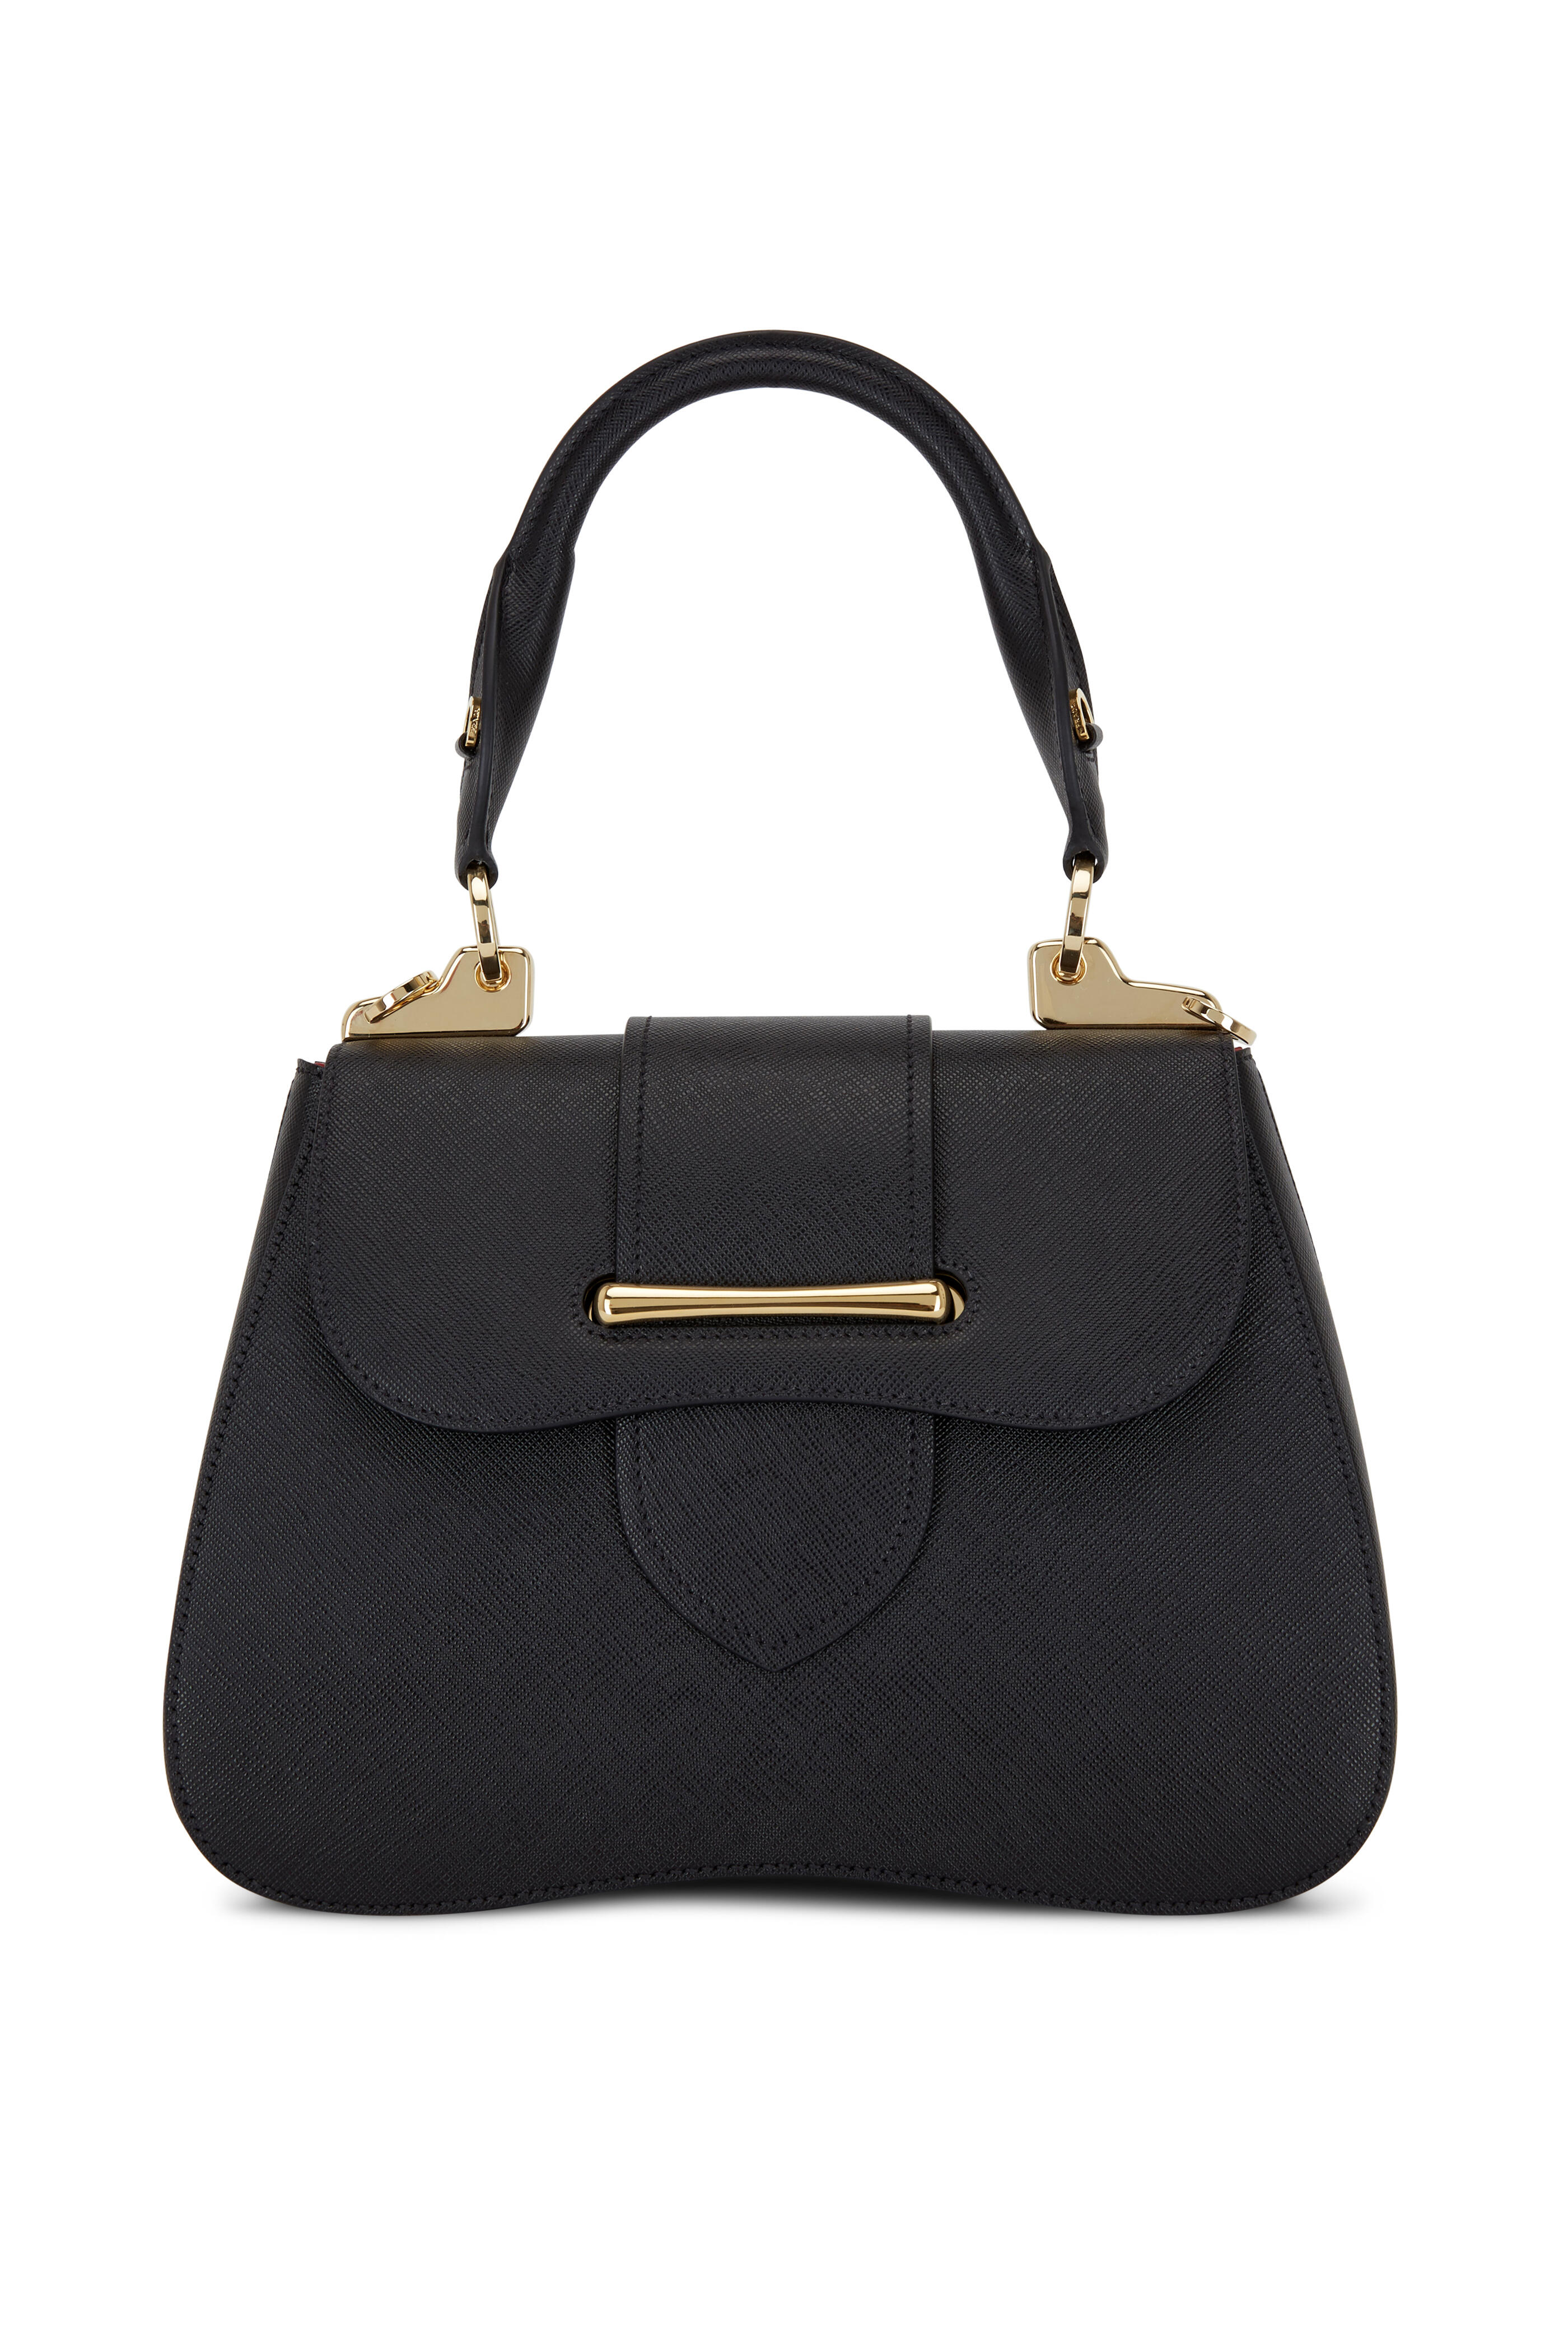 Prada Saffiano Top-Handle Bag - Black